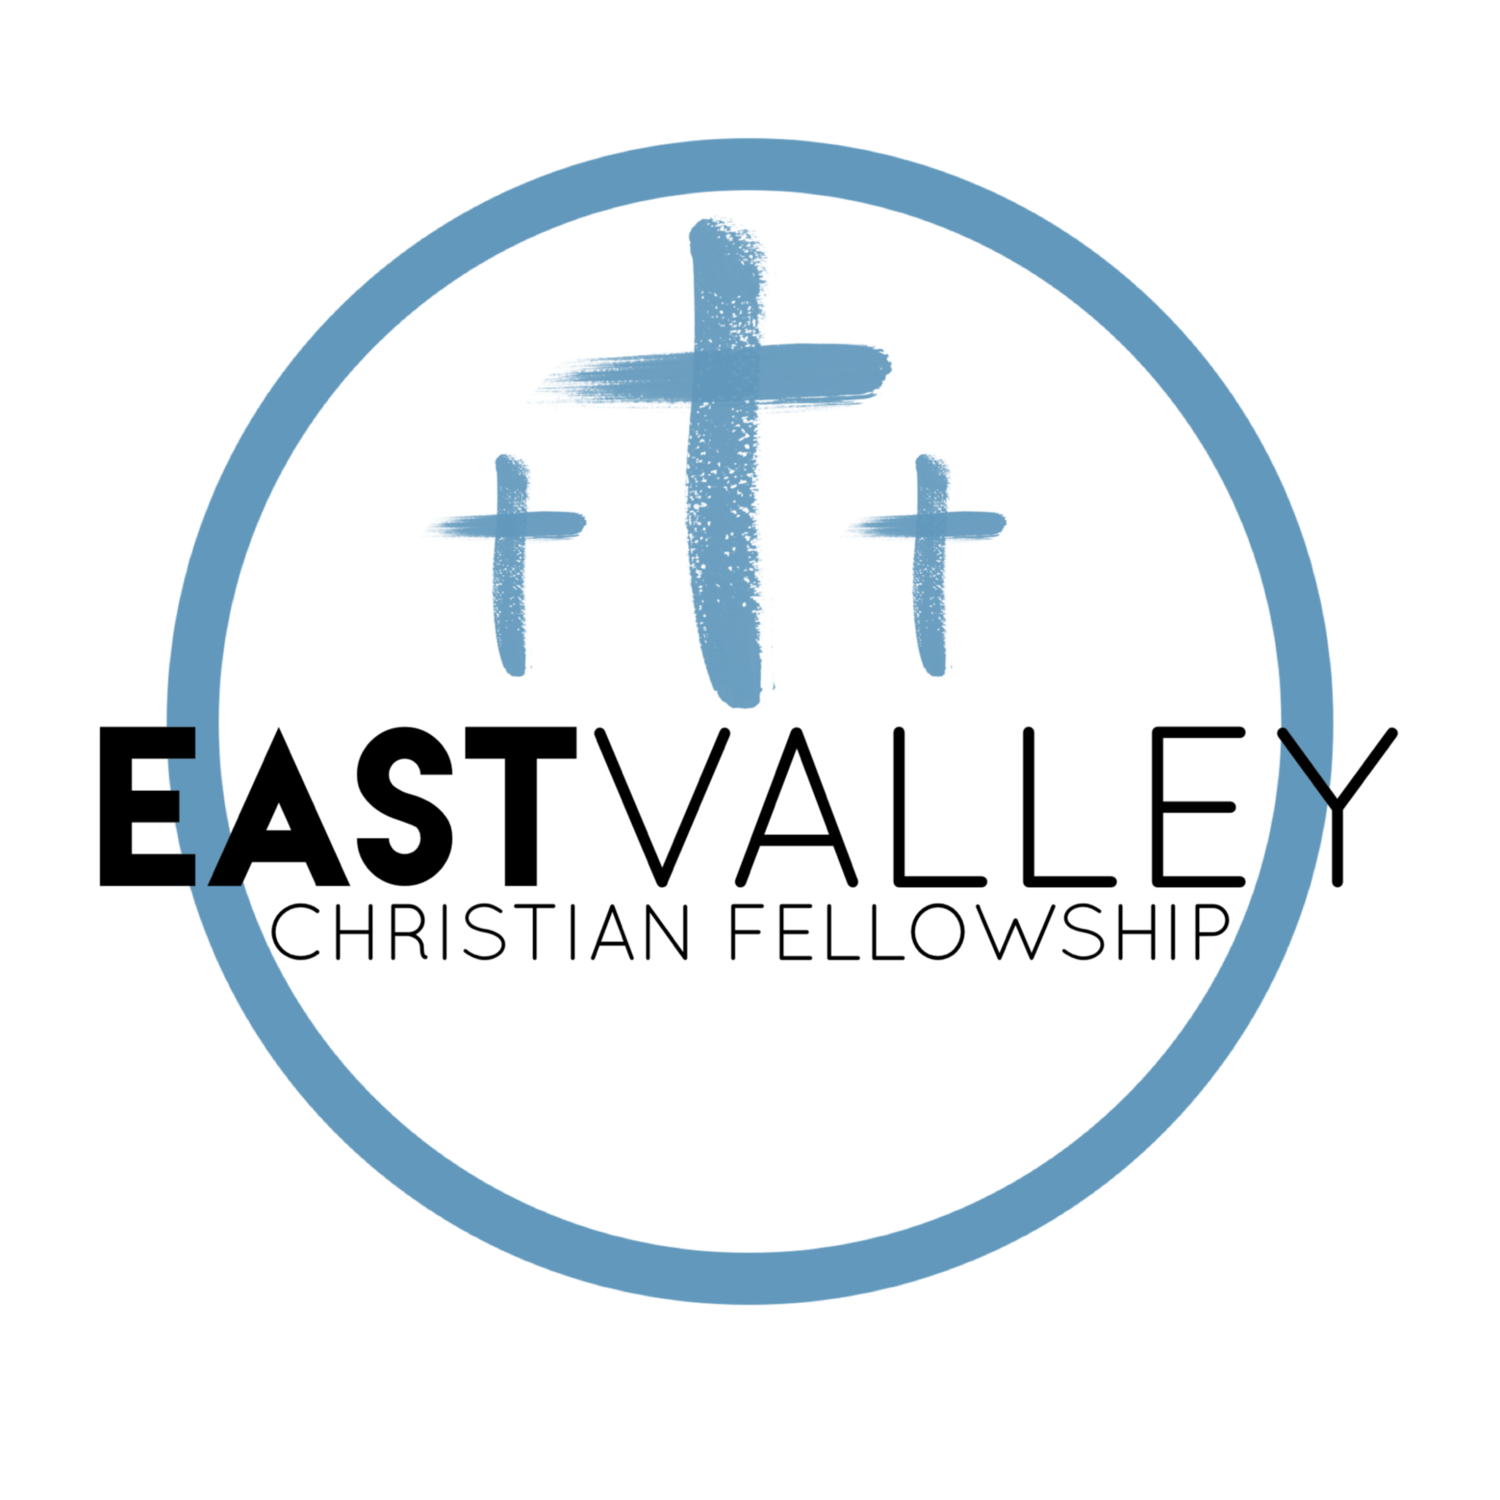 East Valley Christian Fellowship